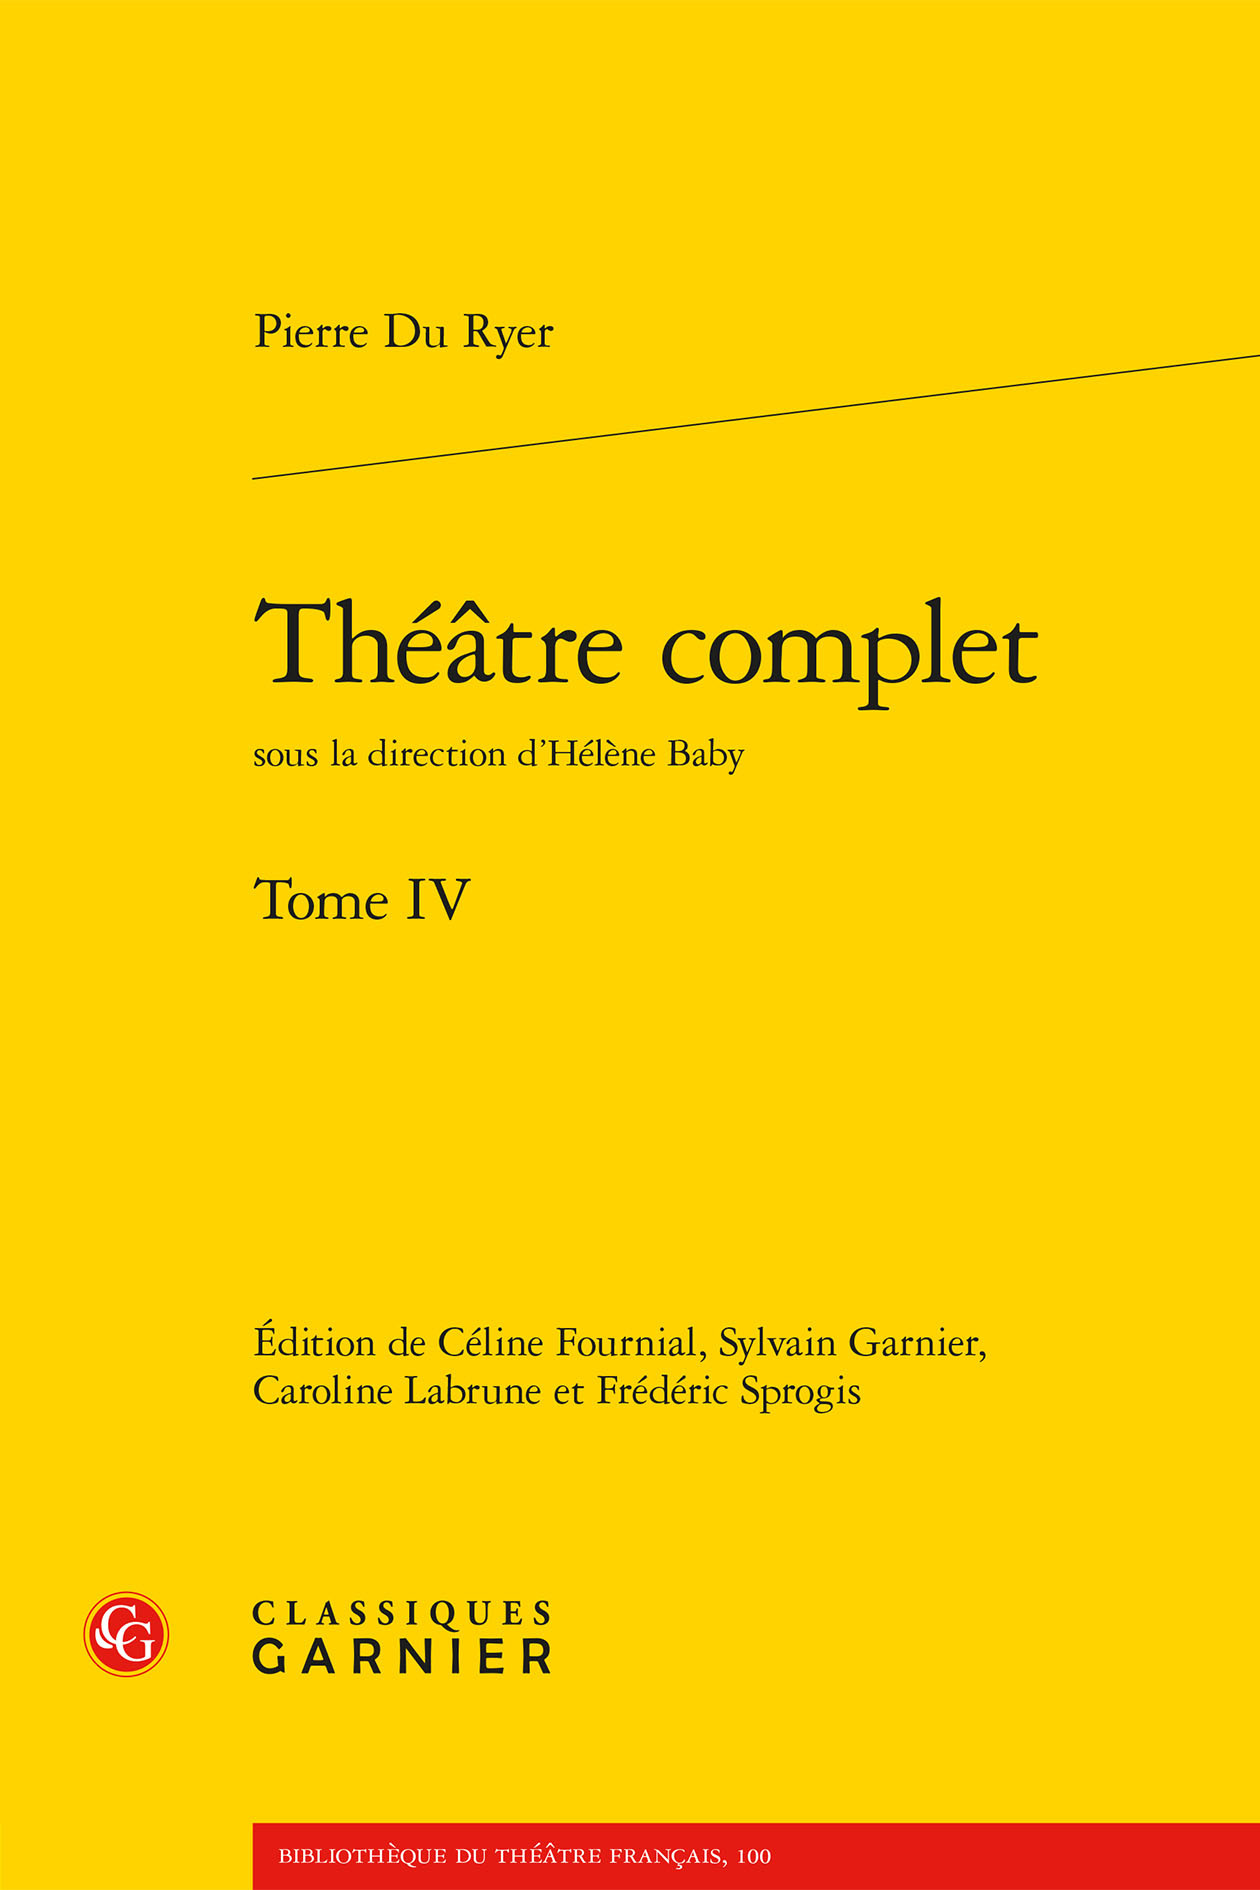 Théâtre complet (9782406149927-front-cover)